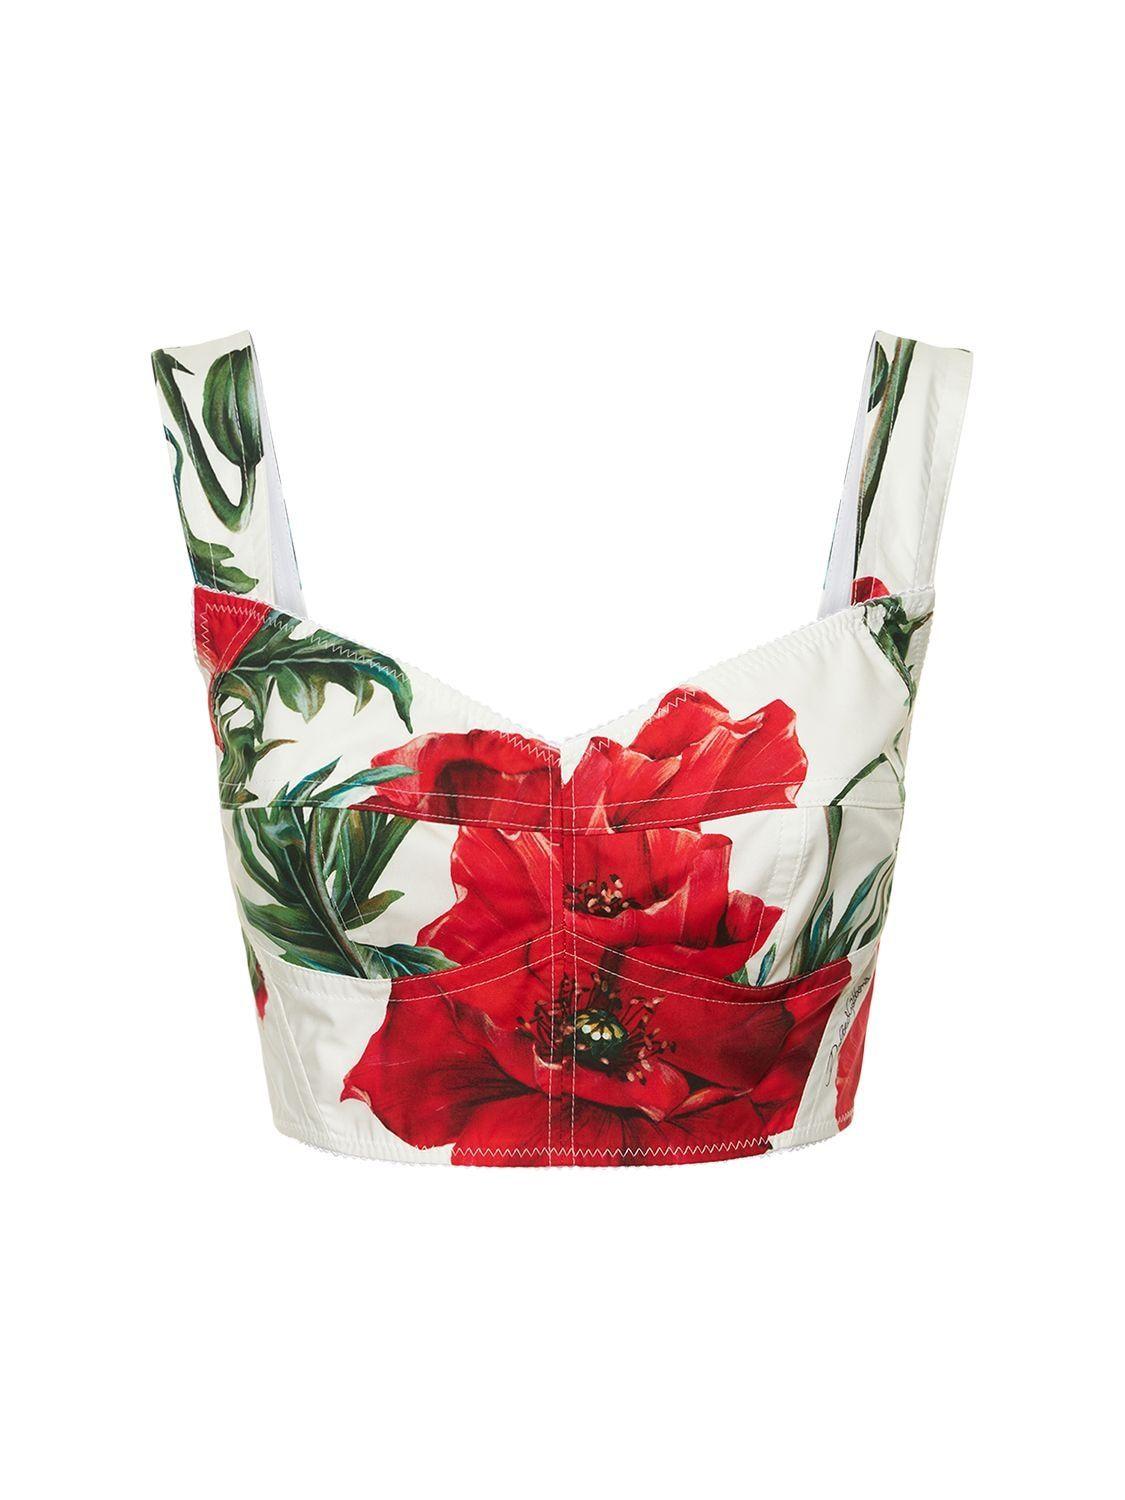 Dolce & Gabbana Poppy Print Cotton Poplin Corset Top in Red | Lyst